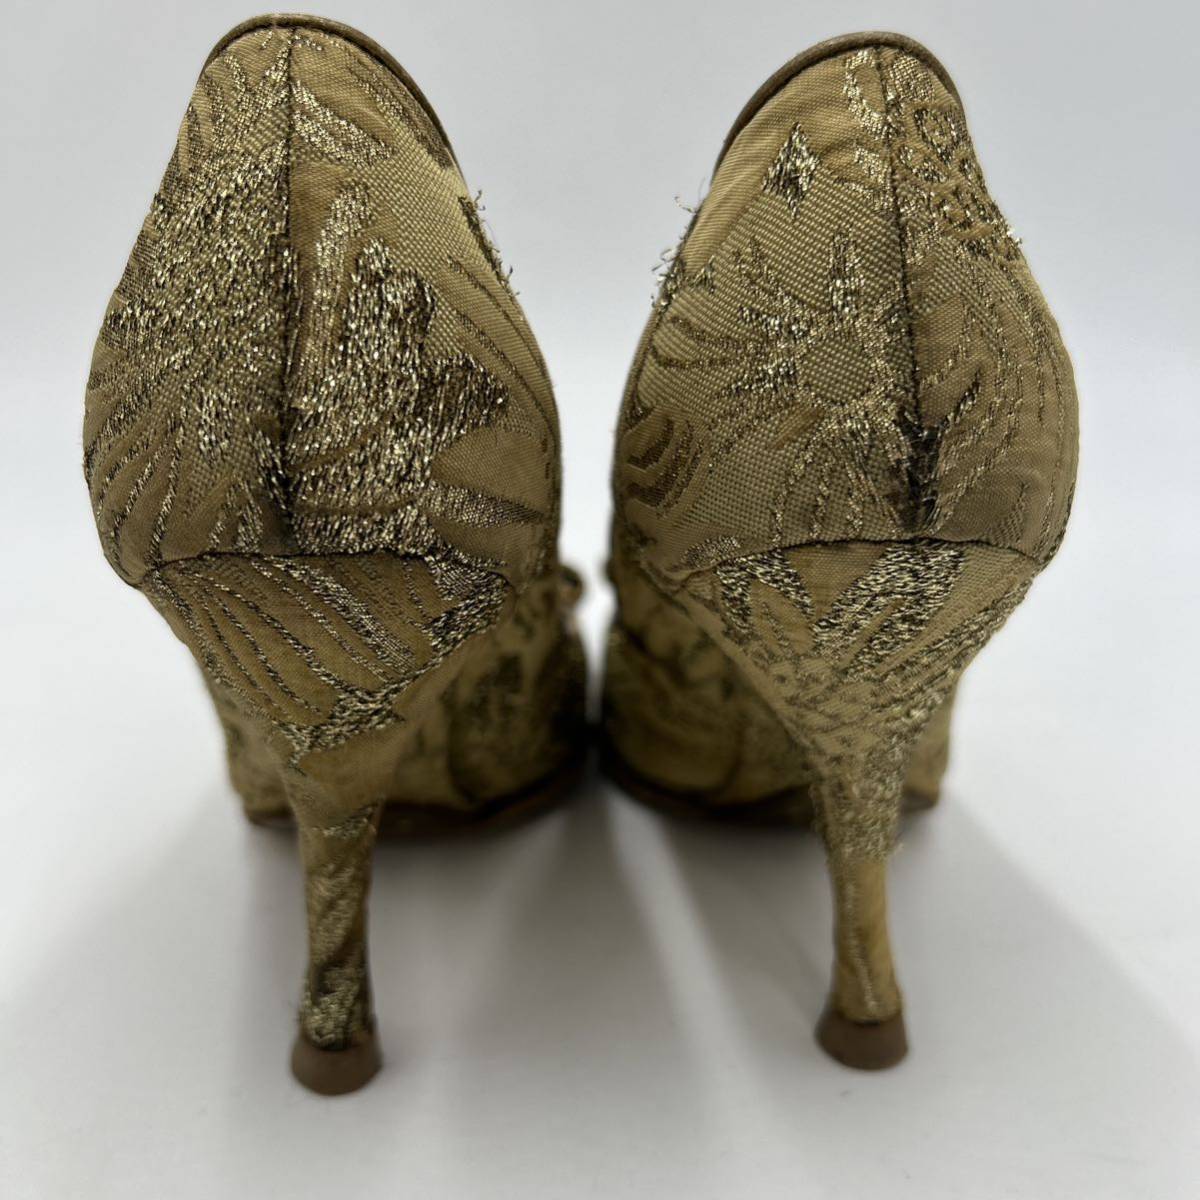 D@ 保存袋付き イタリア製 '高級ラグジュアリー靴' DOLCE&GABBANA ドルチェ&ガッバーナ 総柄 リボン付き ヒール パンプス EU35 22cm 婦人靴_画像6